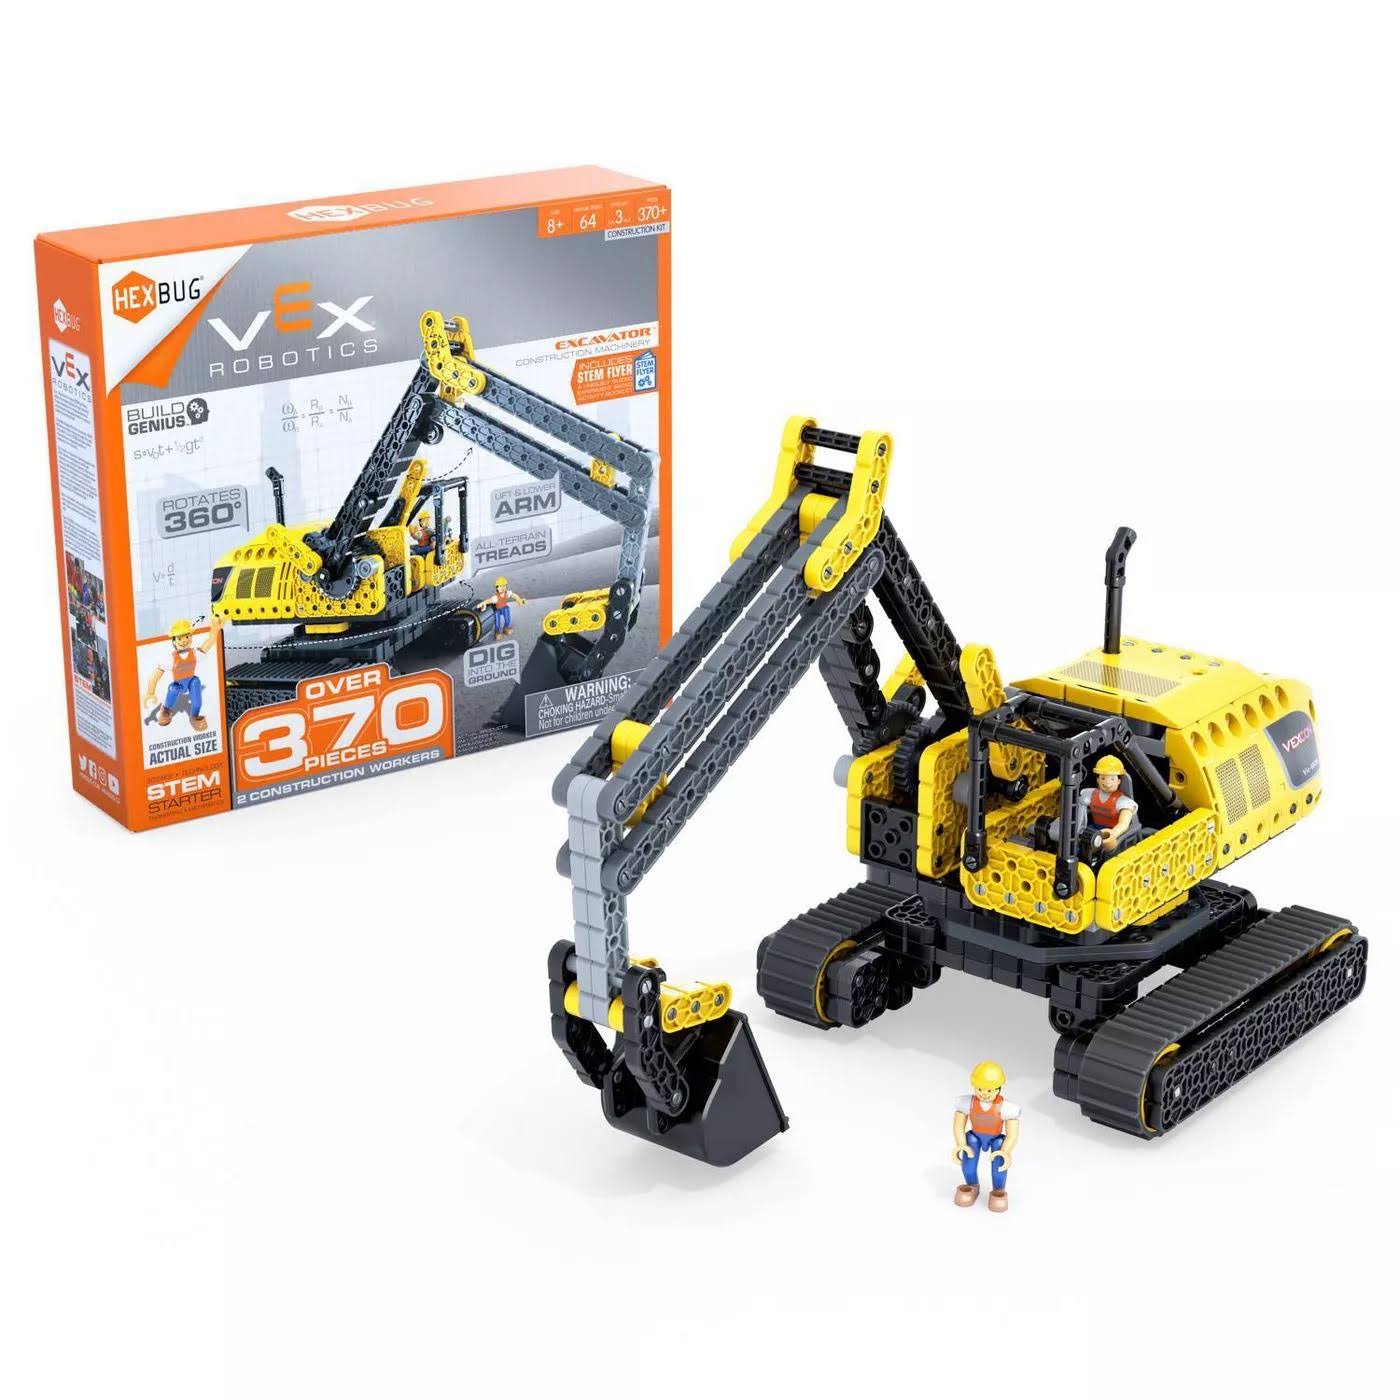 Hexbug Vex Excavator, Robotics